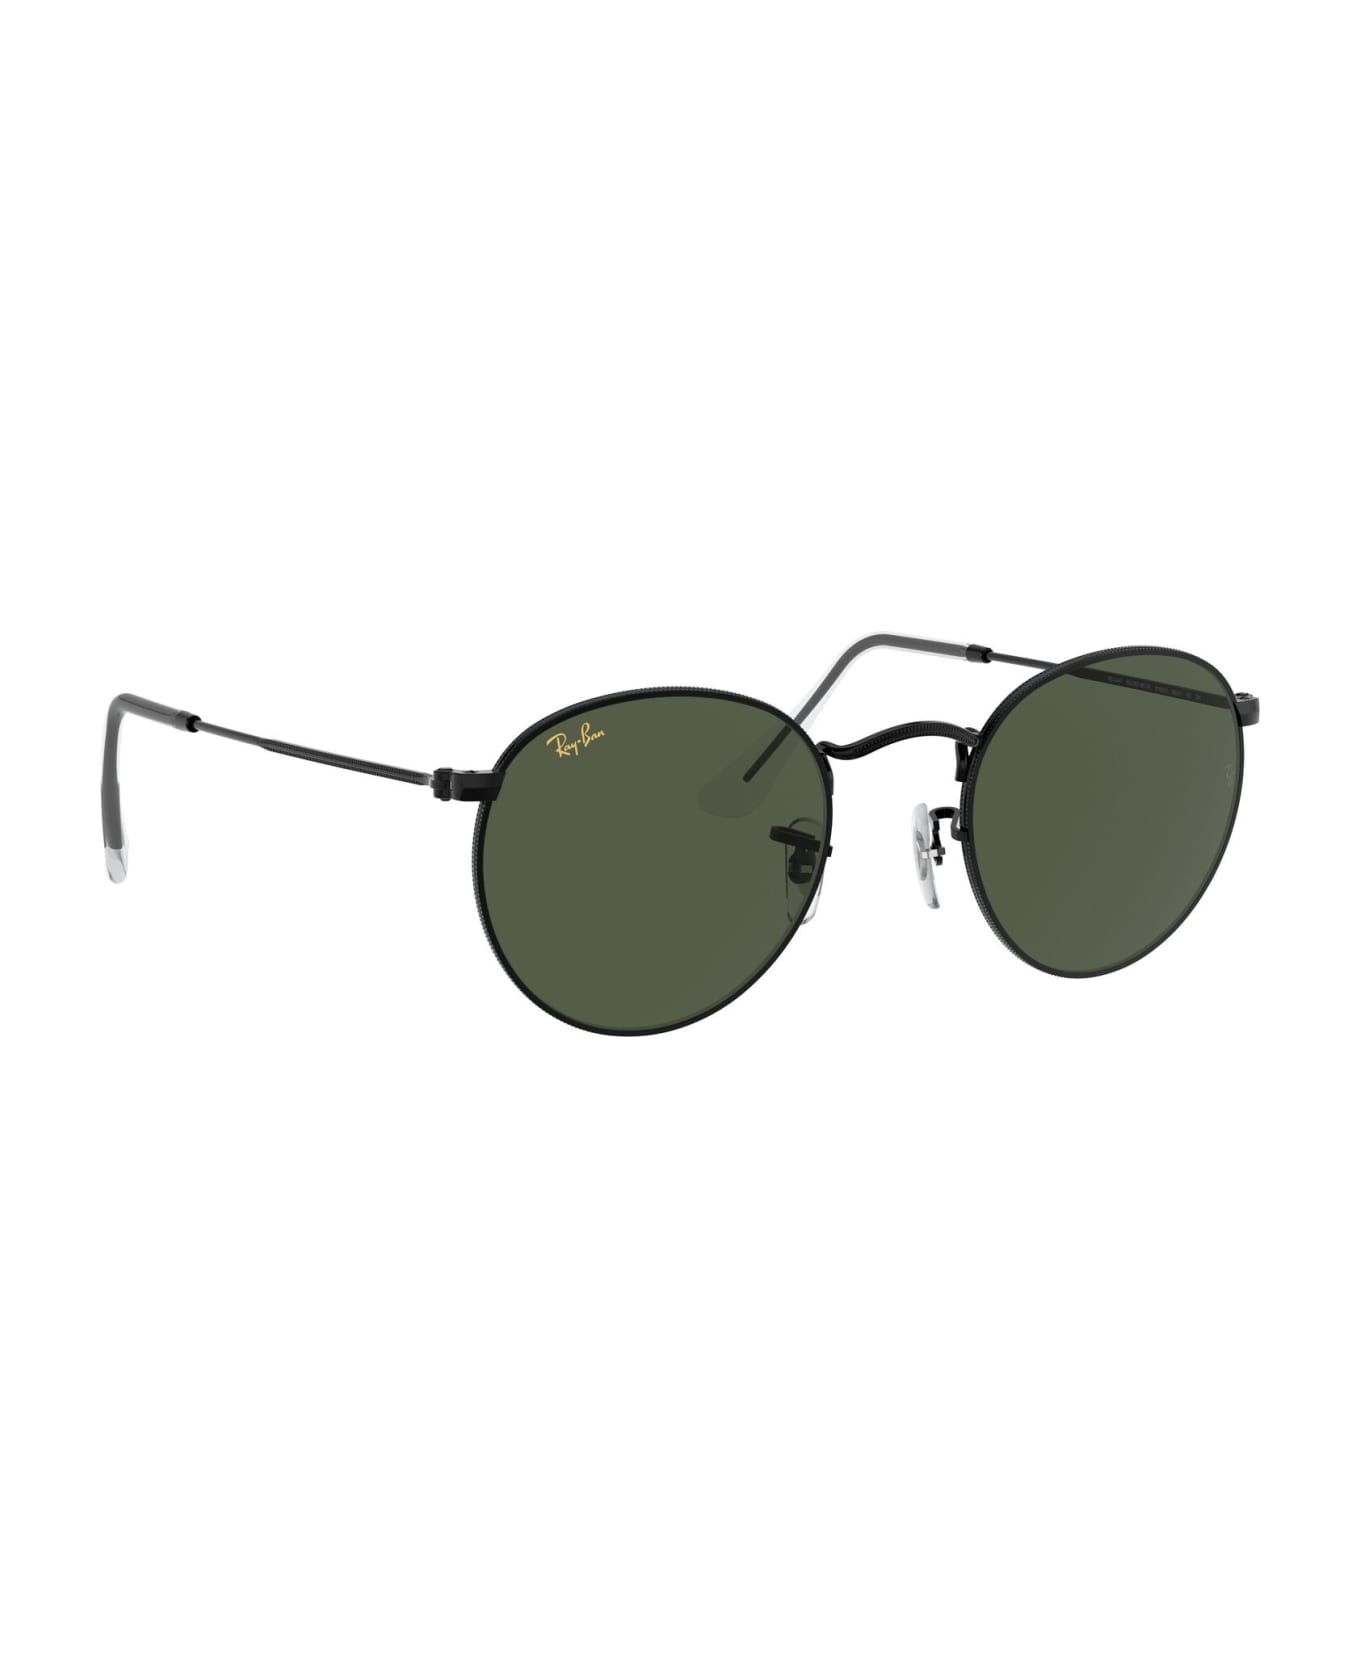 Ray-Ban Sunglasses - Nero/Verde